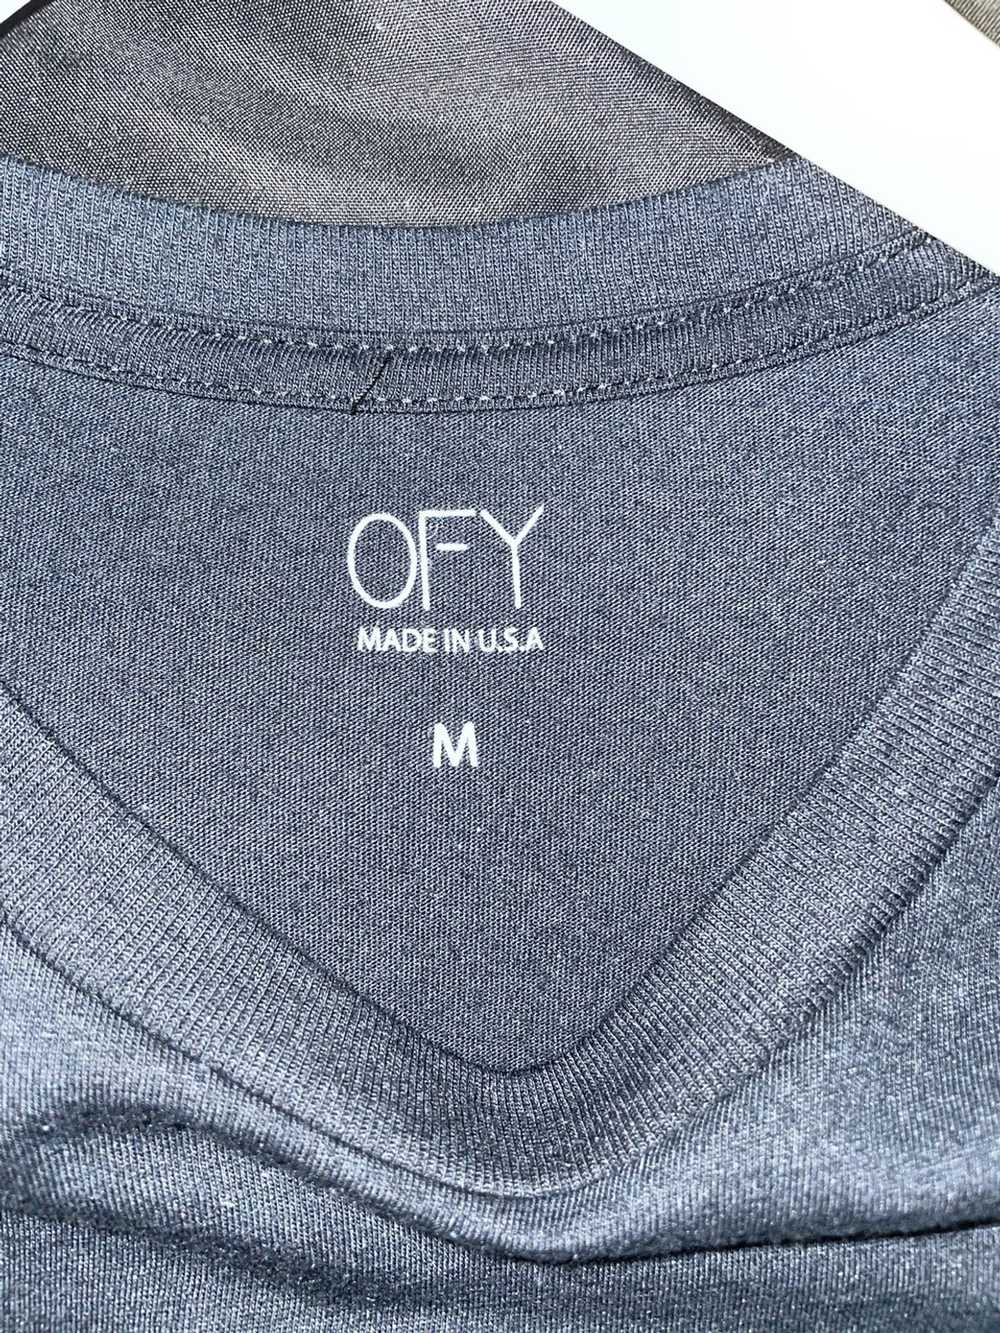 Pop Boutique OFY (Miami) stitched tee: medium - image 3